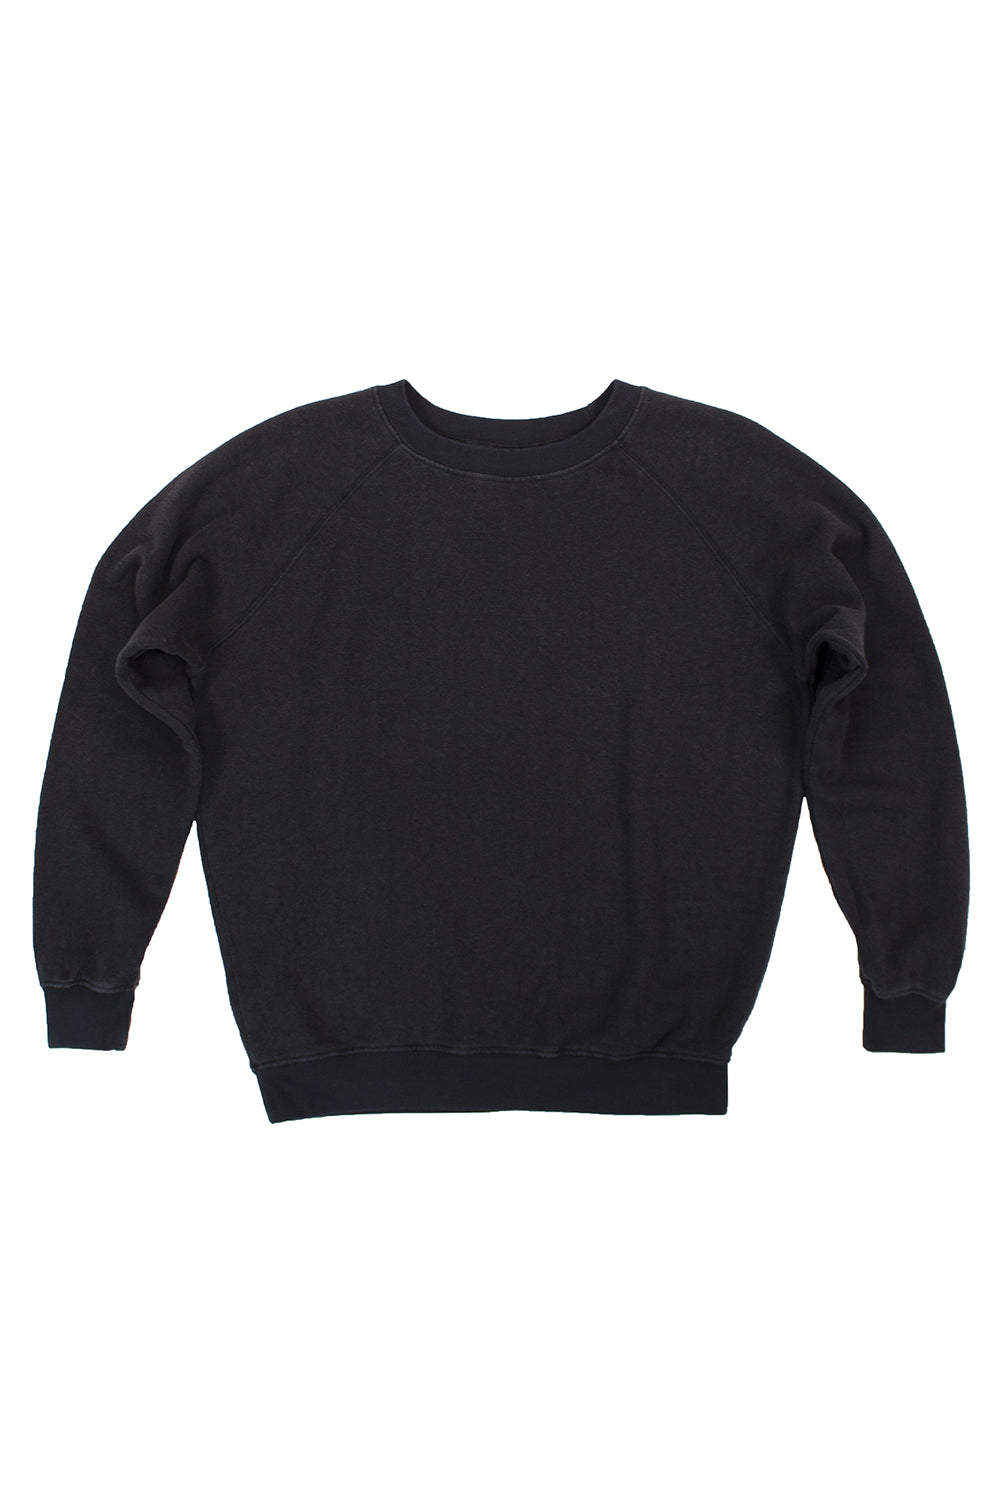 Bonfire Raglan Sweatshirt | Jungmaven Hemp Clothing & Accessories / Color: Black